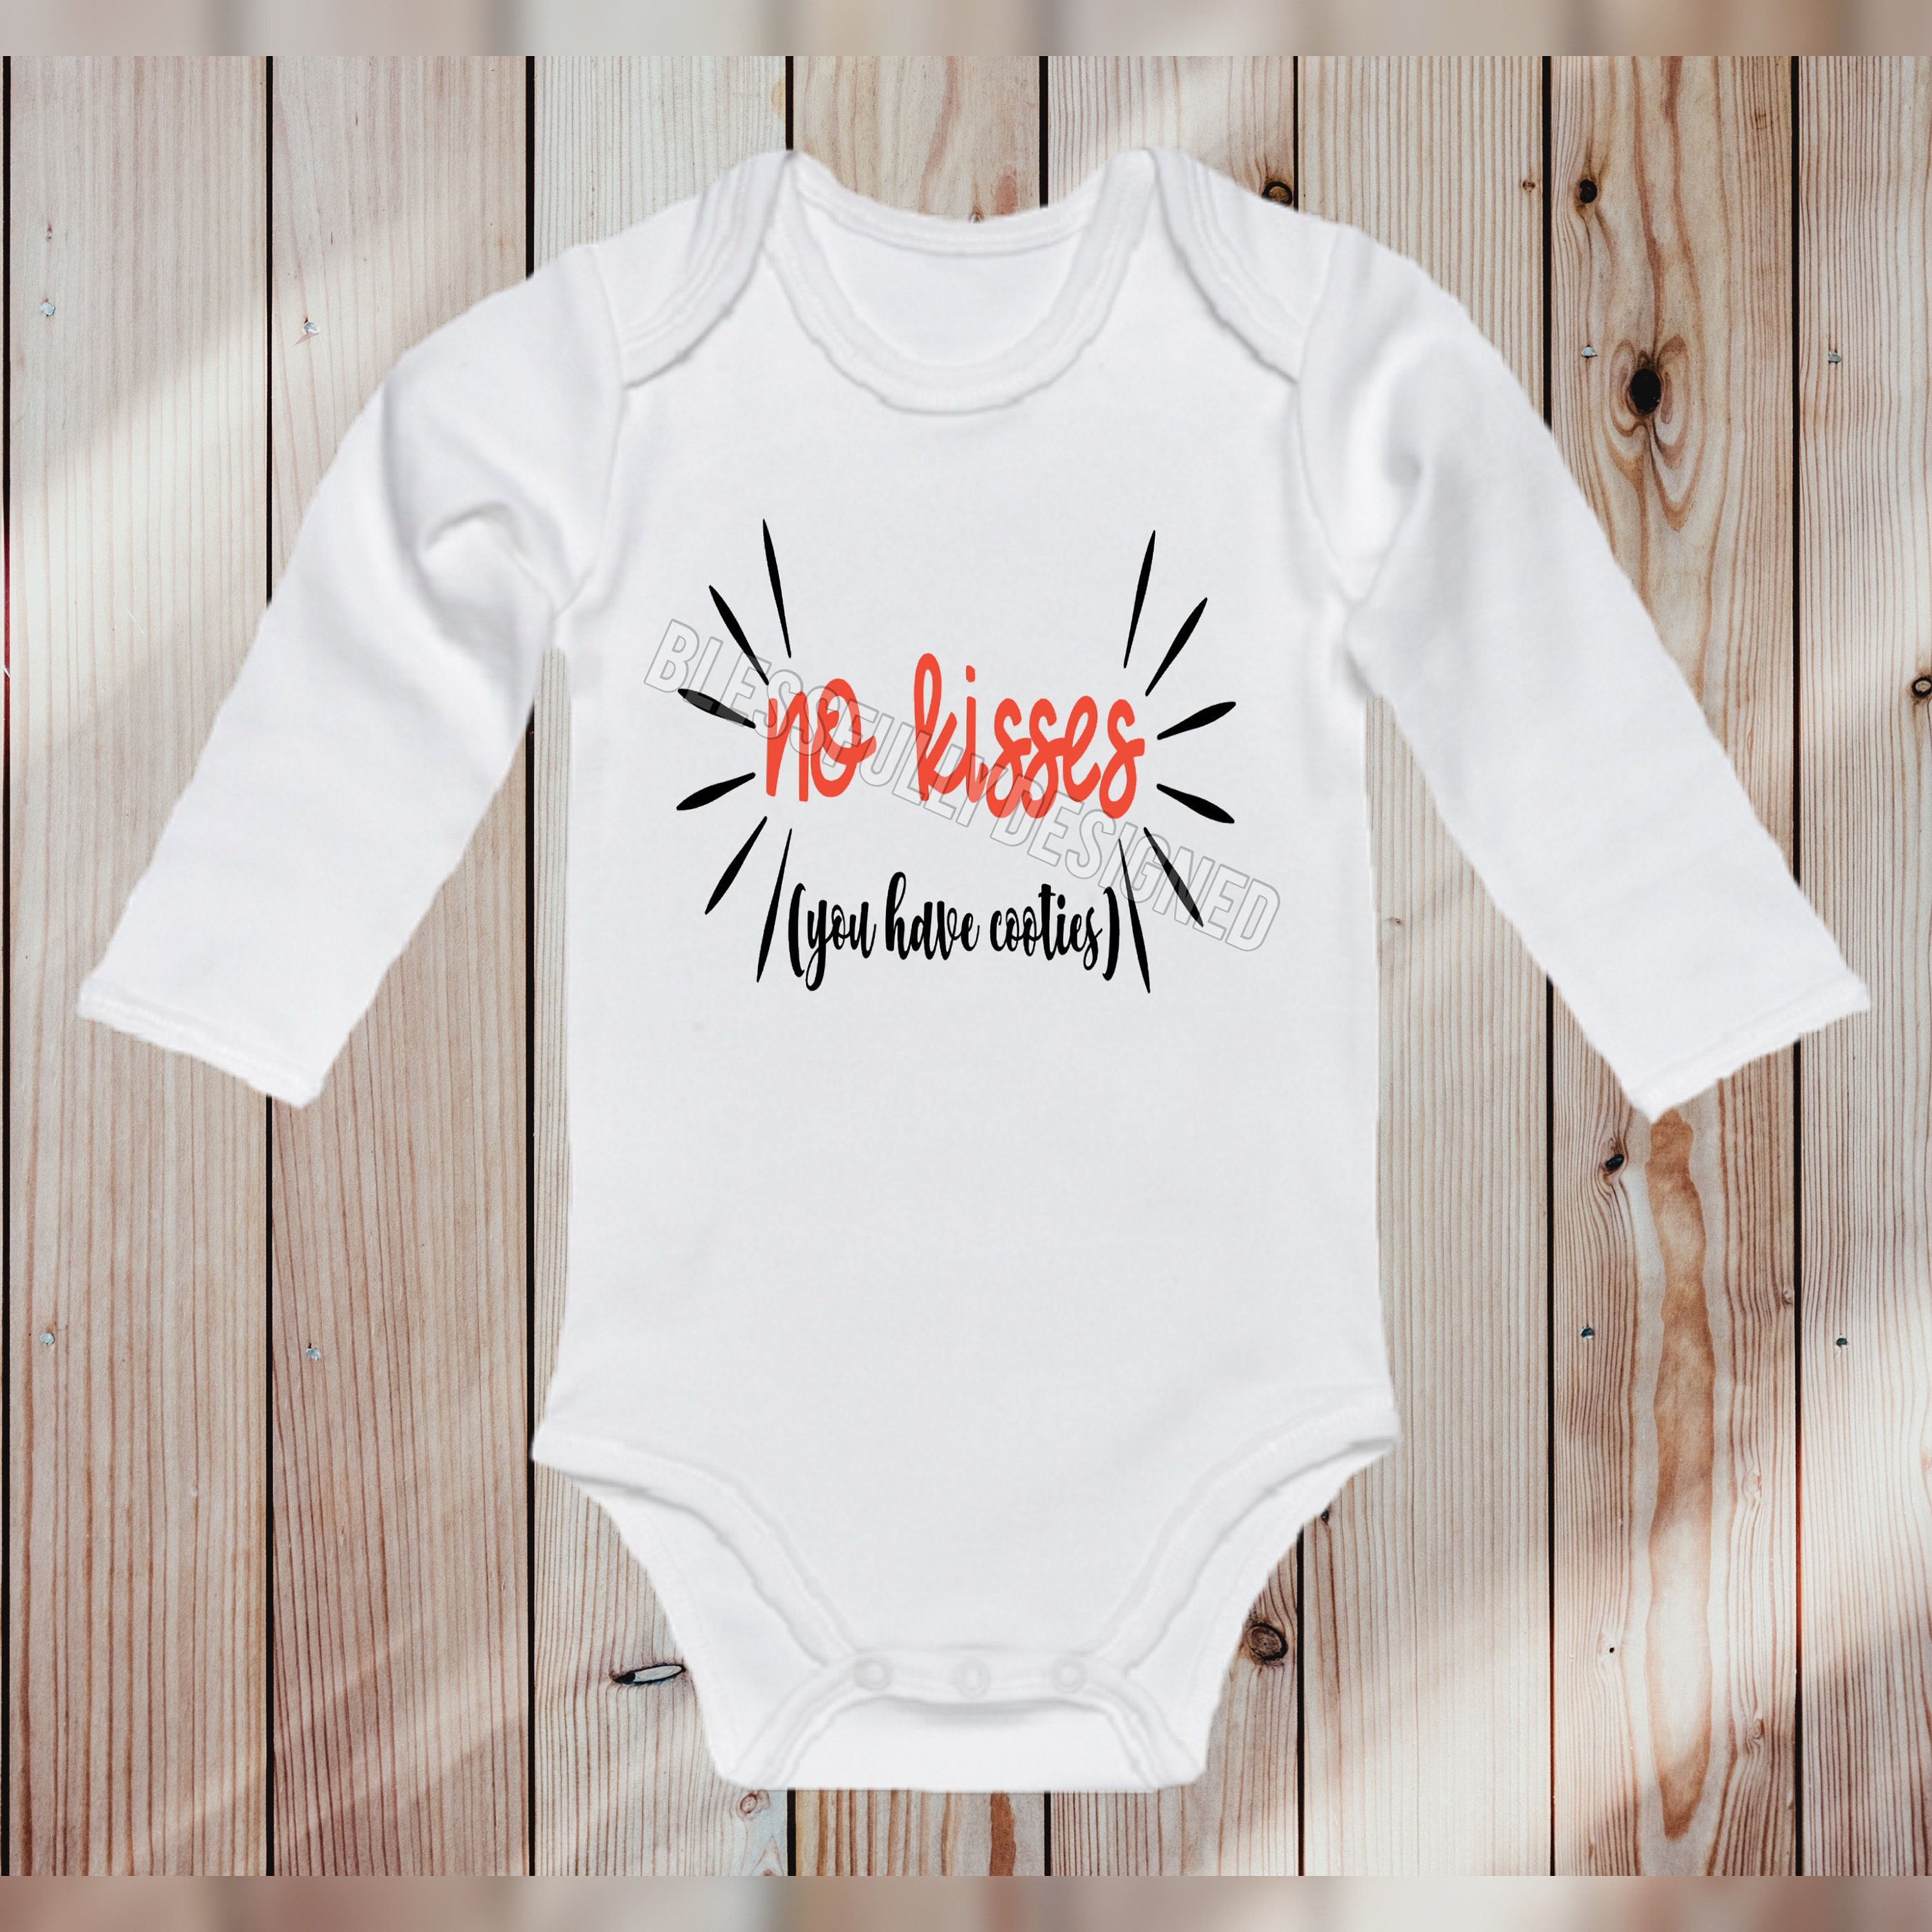 No Kisses You Have Cooties Infant Bodysuit Baby Newborn | Etsy